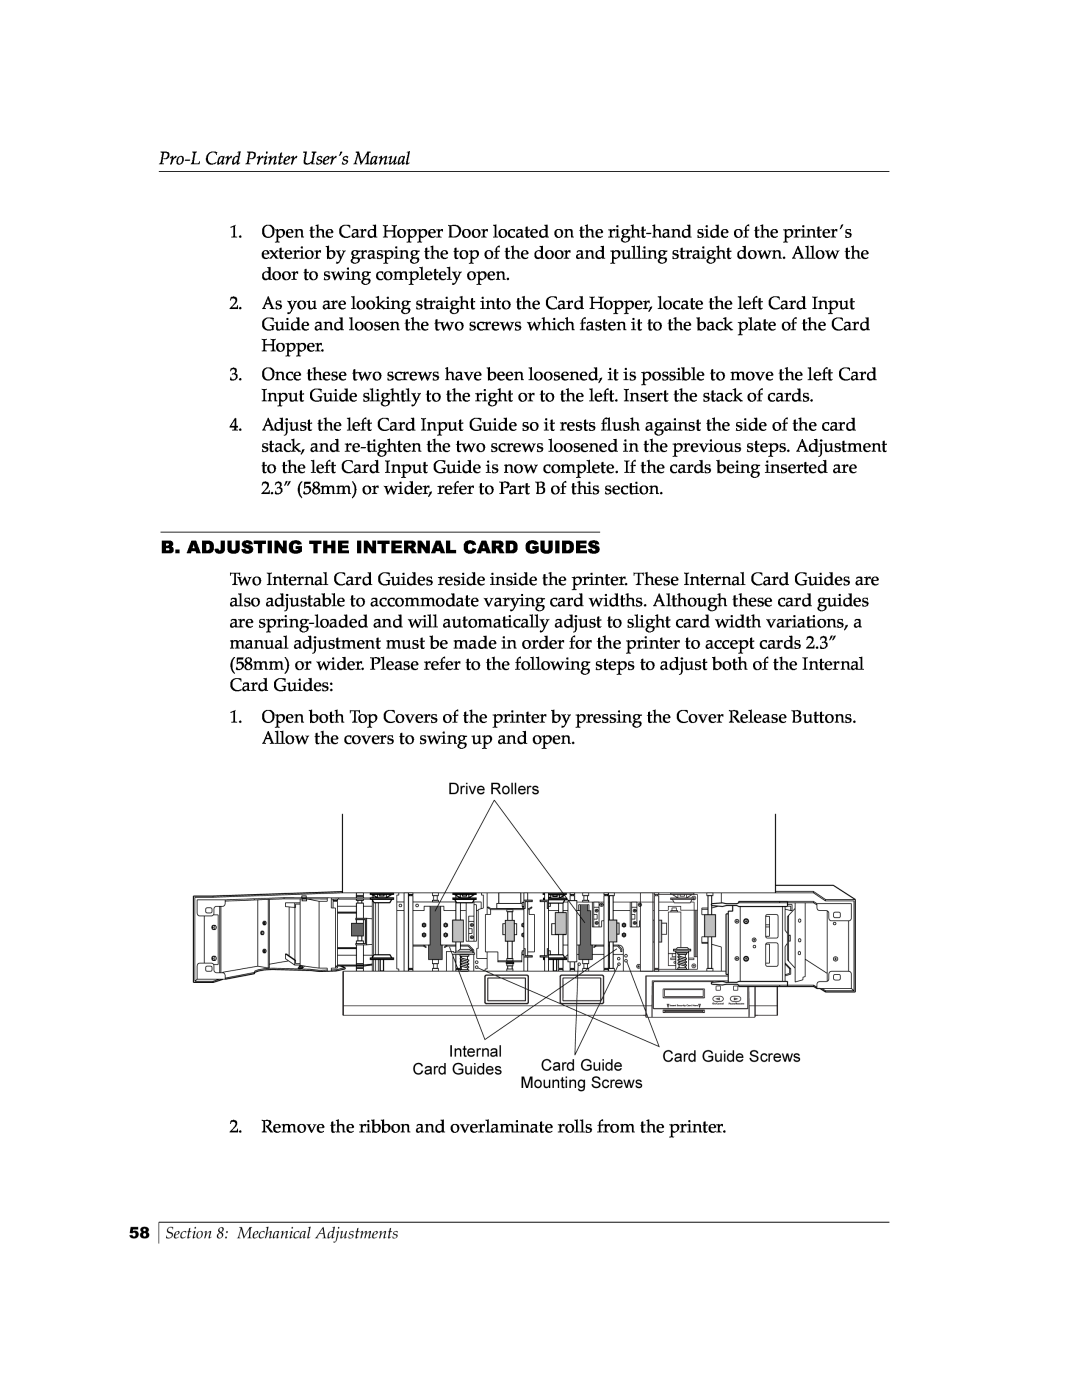 FARGO electronic Pro-L manual B. Adjusting The Internal Card Guides 